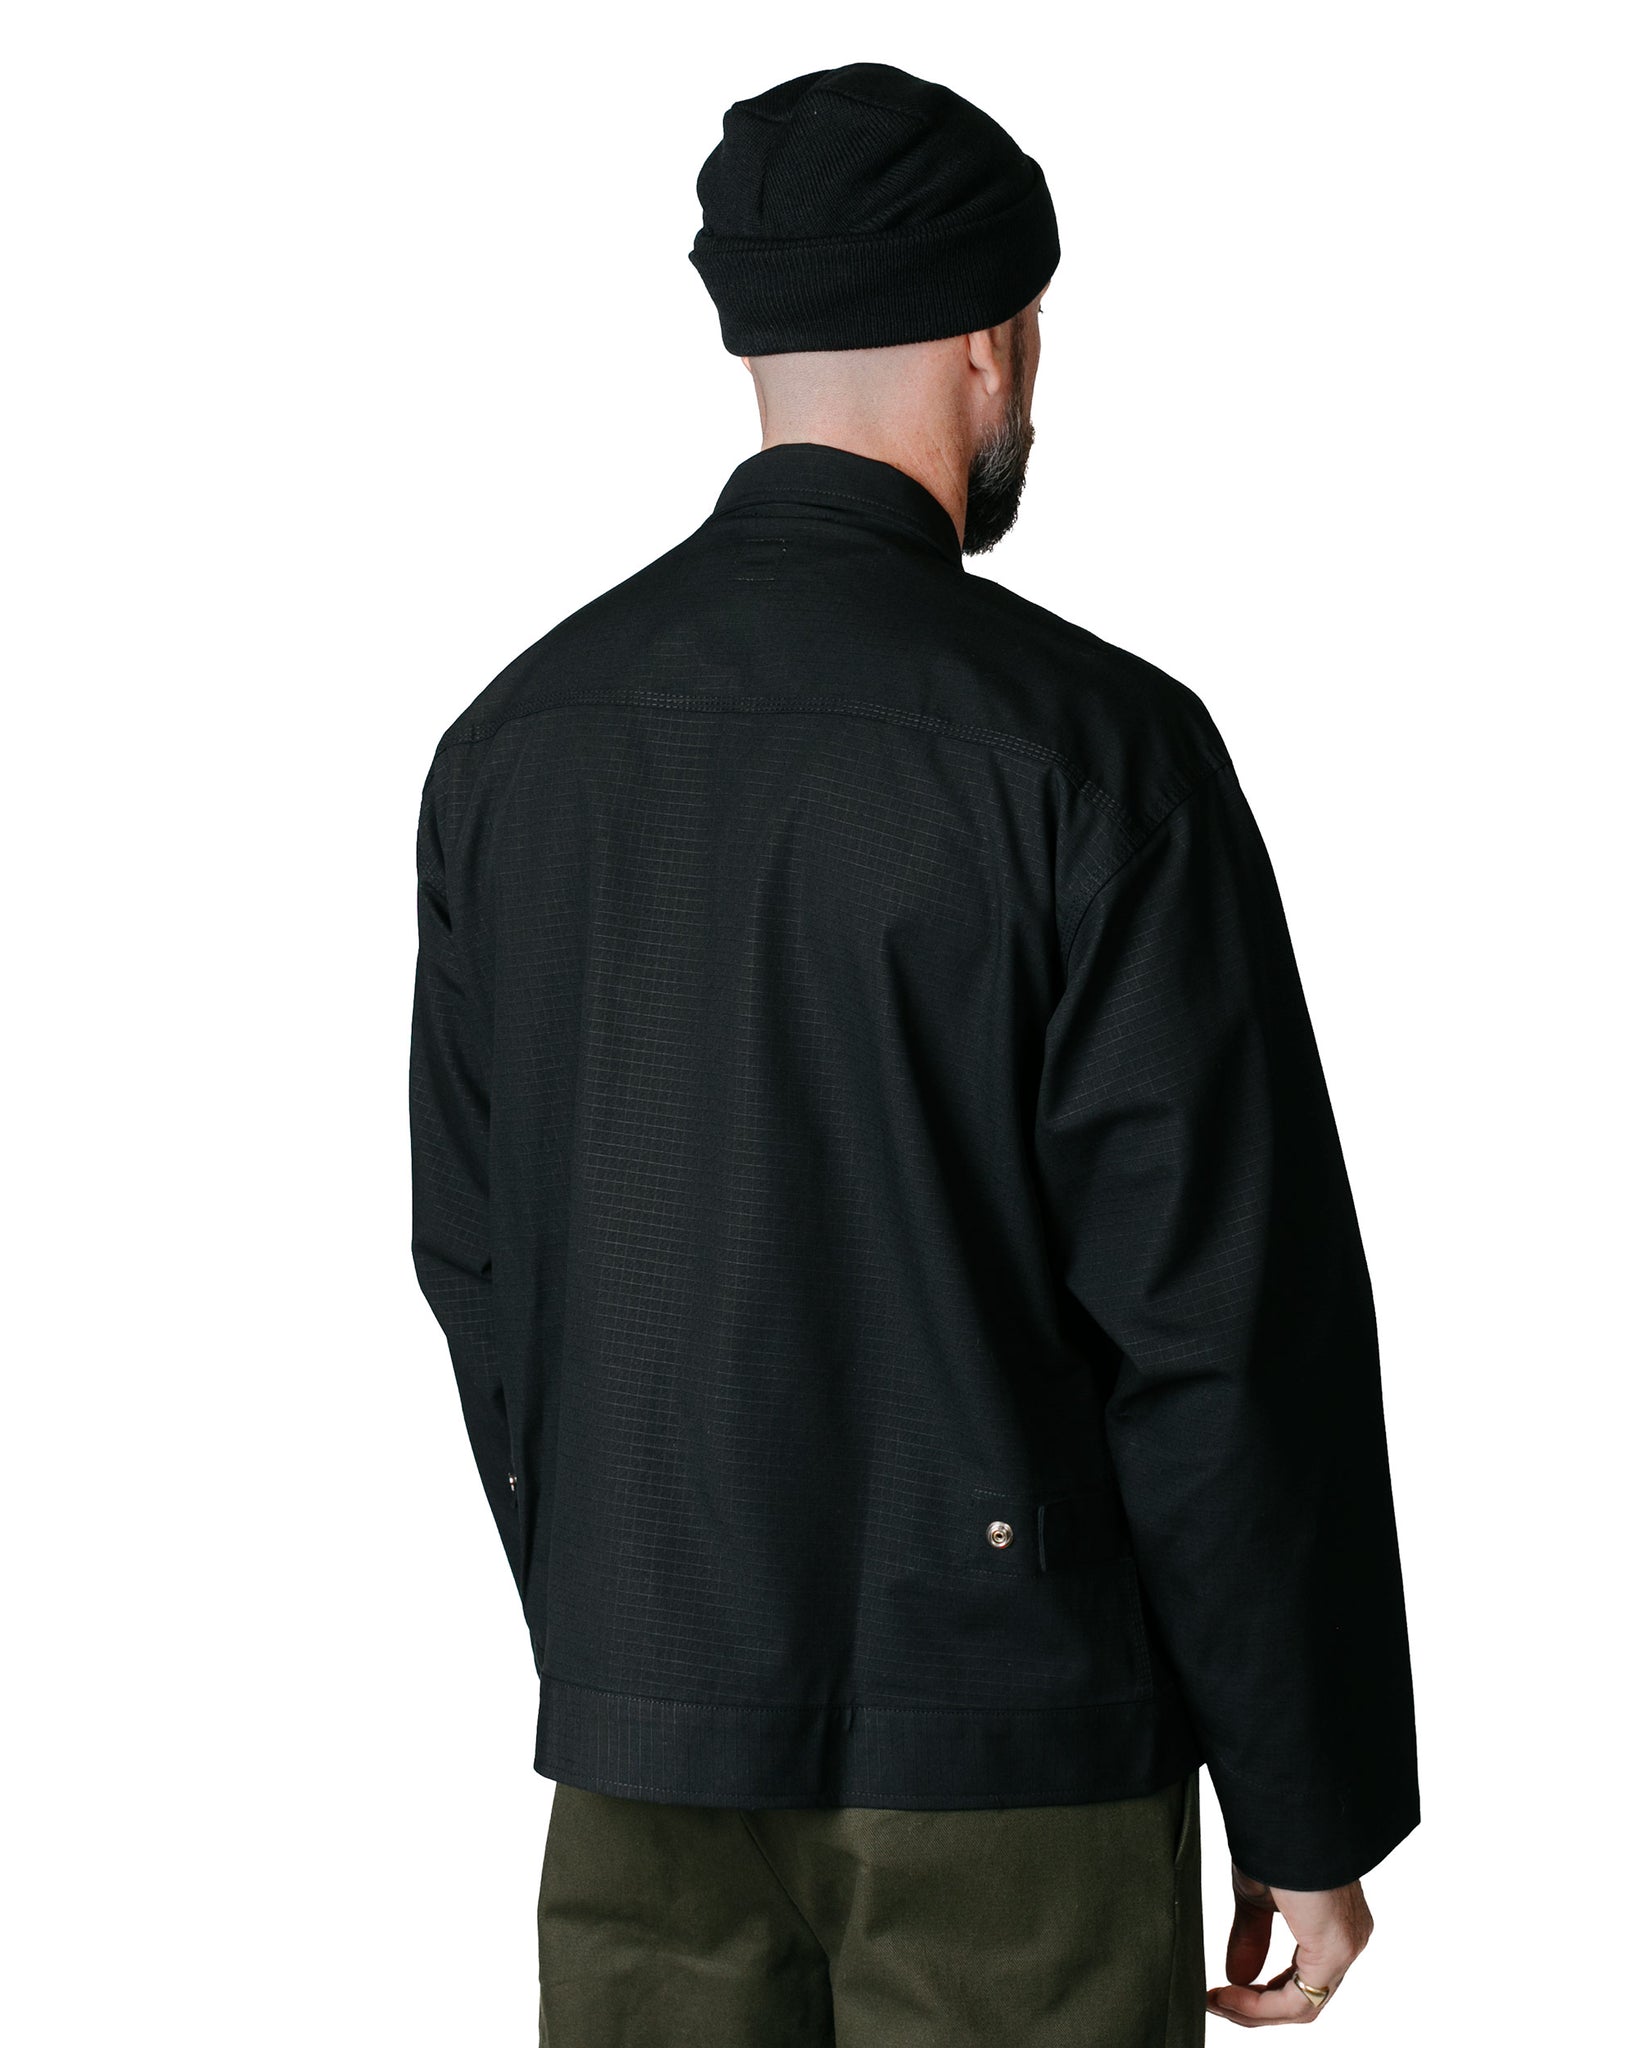 Randy's Garments Service Jacket Cotton Ripstop Black model back